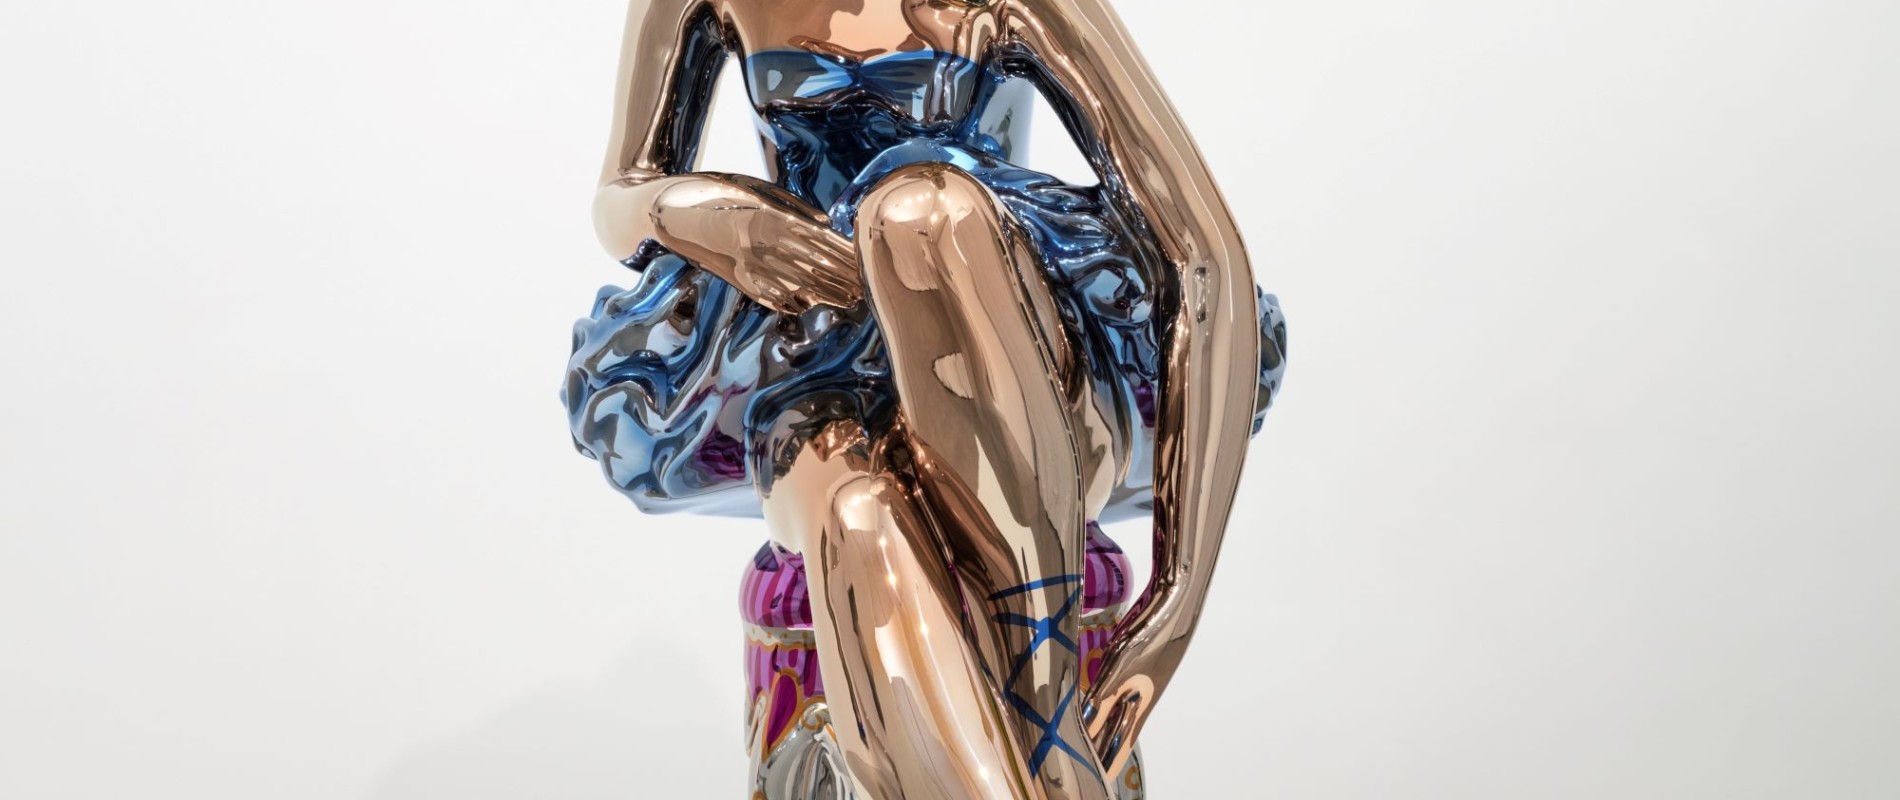 JEFF KOONS Seated Ballerina, 2010-2015 © Jeff Koons